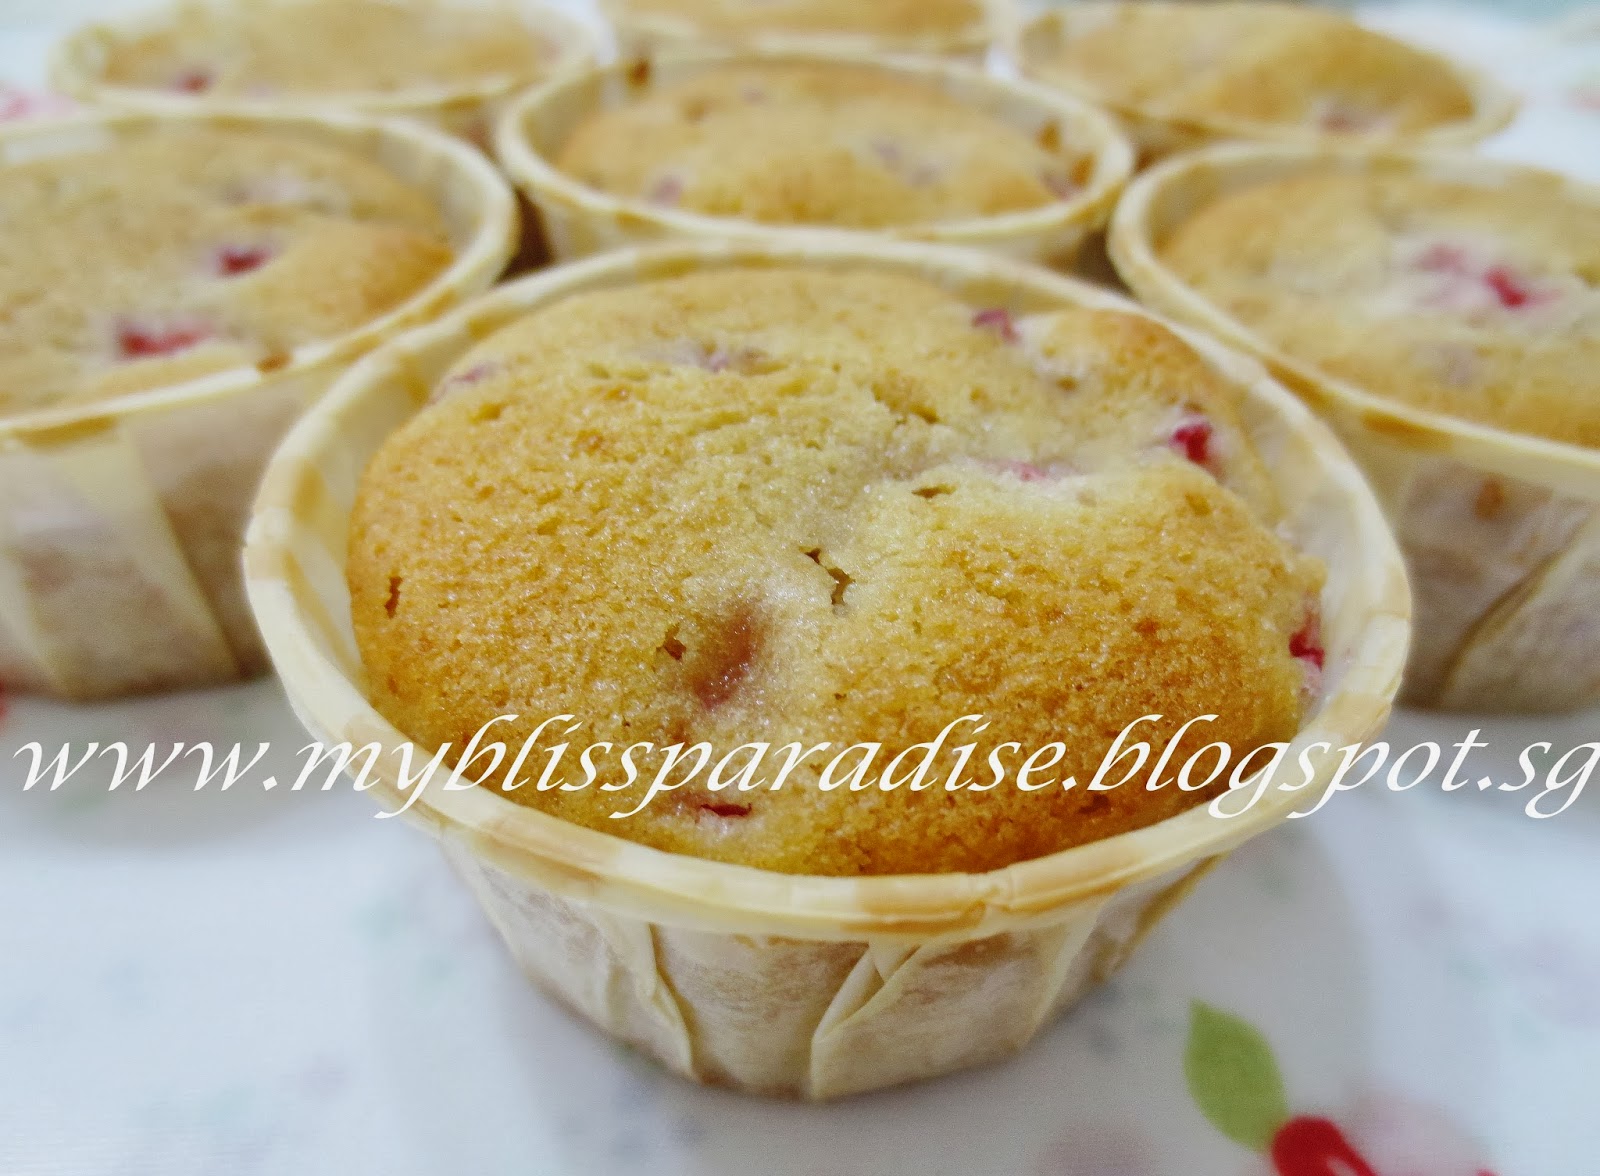 http://myblissparadise.blogspot.sg/2014/01/fresh-strawberry-cupcakes-15-jan-14.html